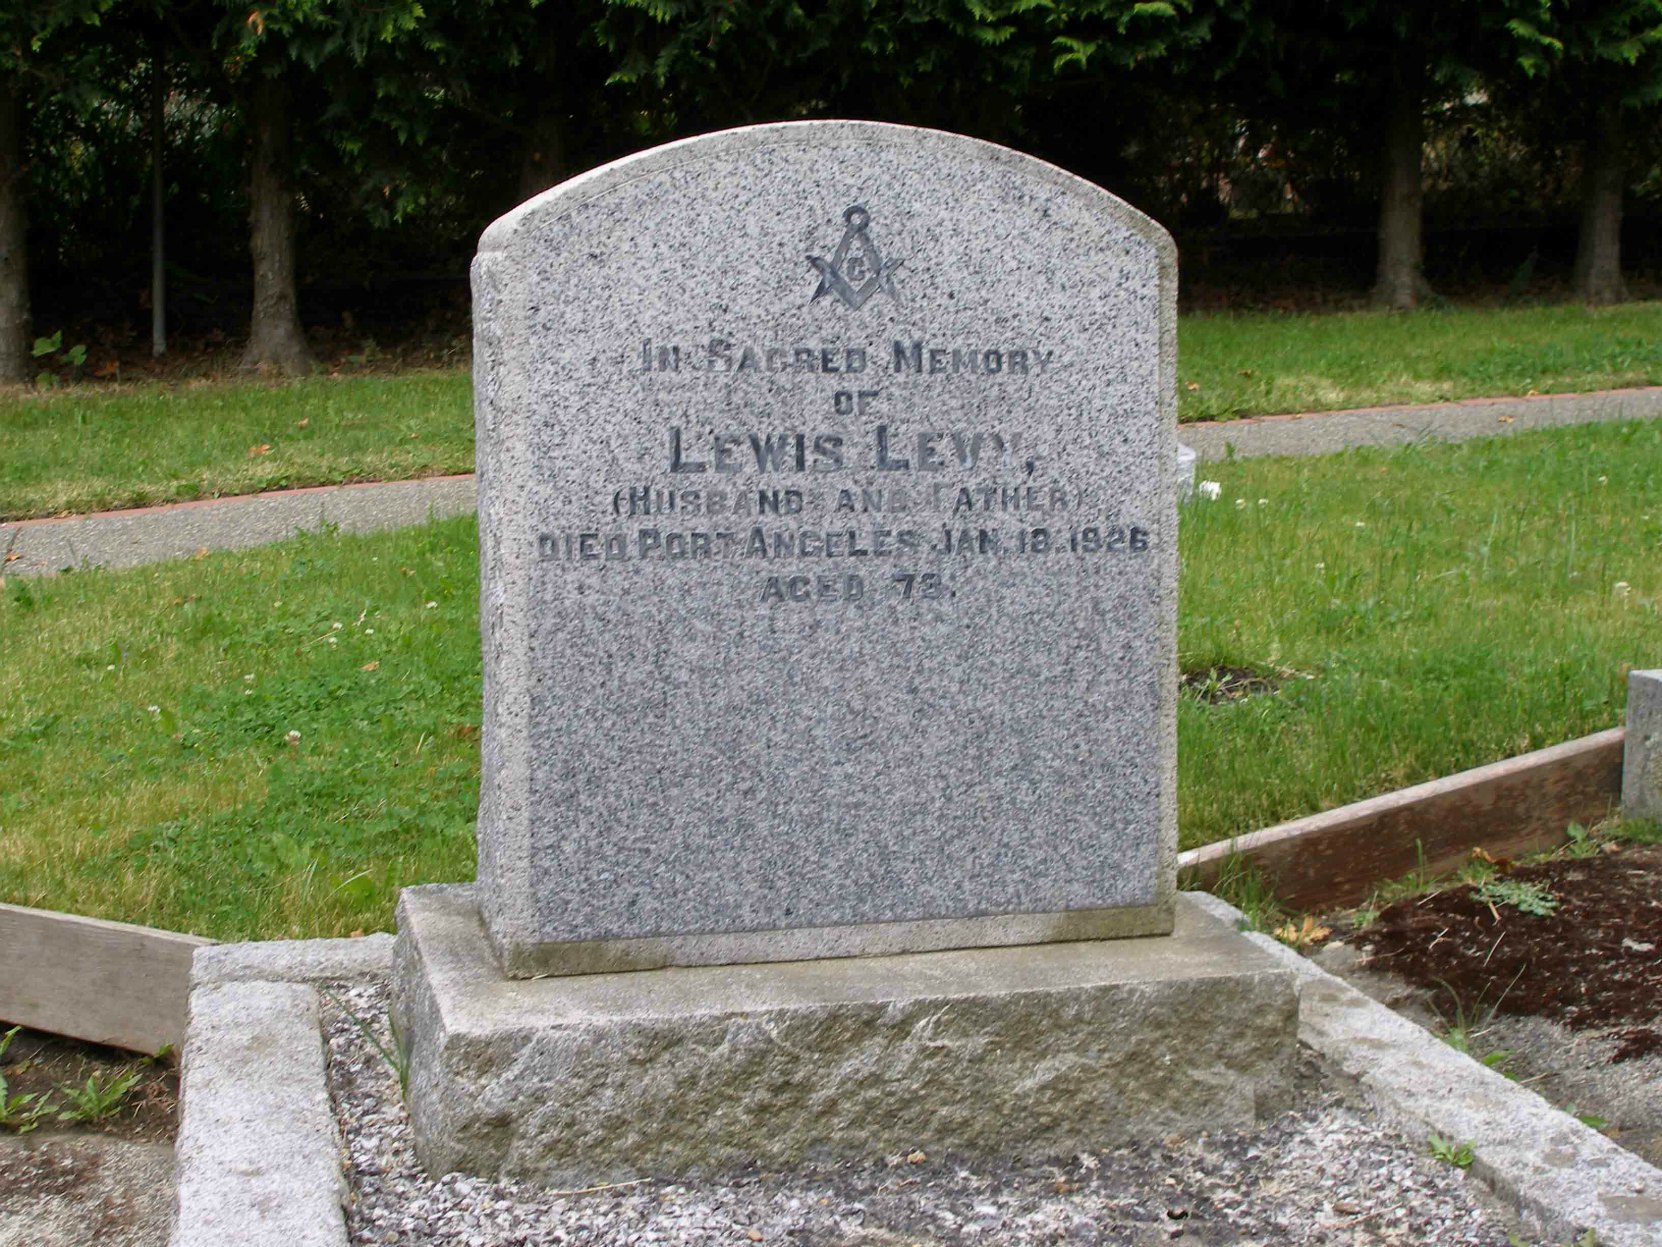 Lewis Levy headstone, Victoria Jewish Cemetery, Victoria, B.C.